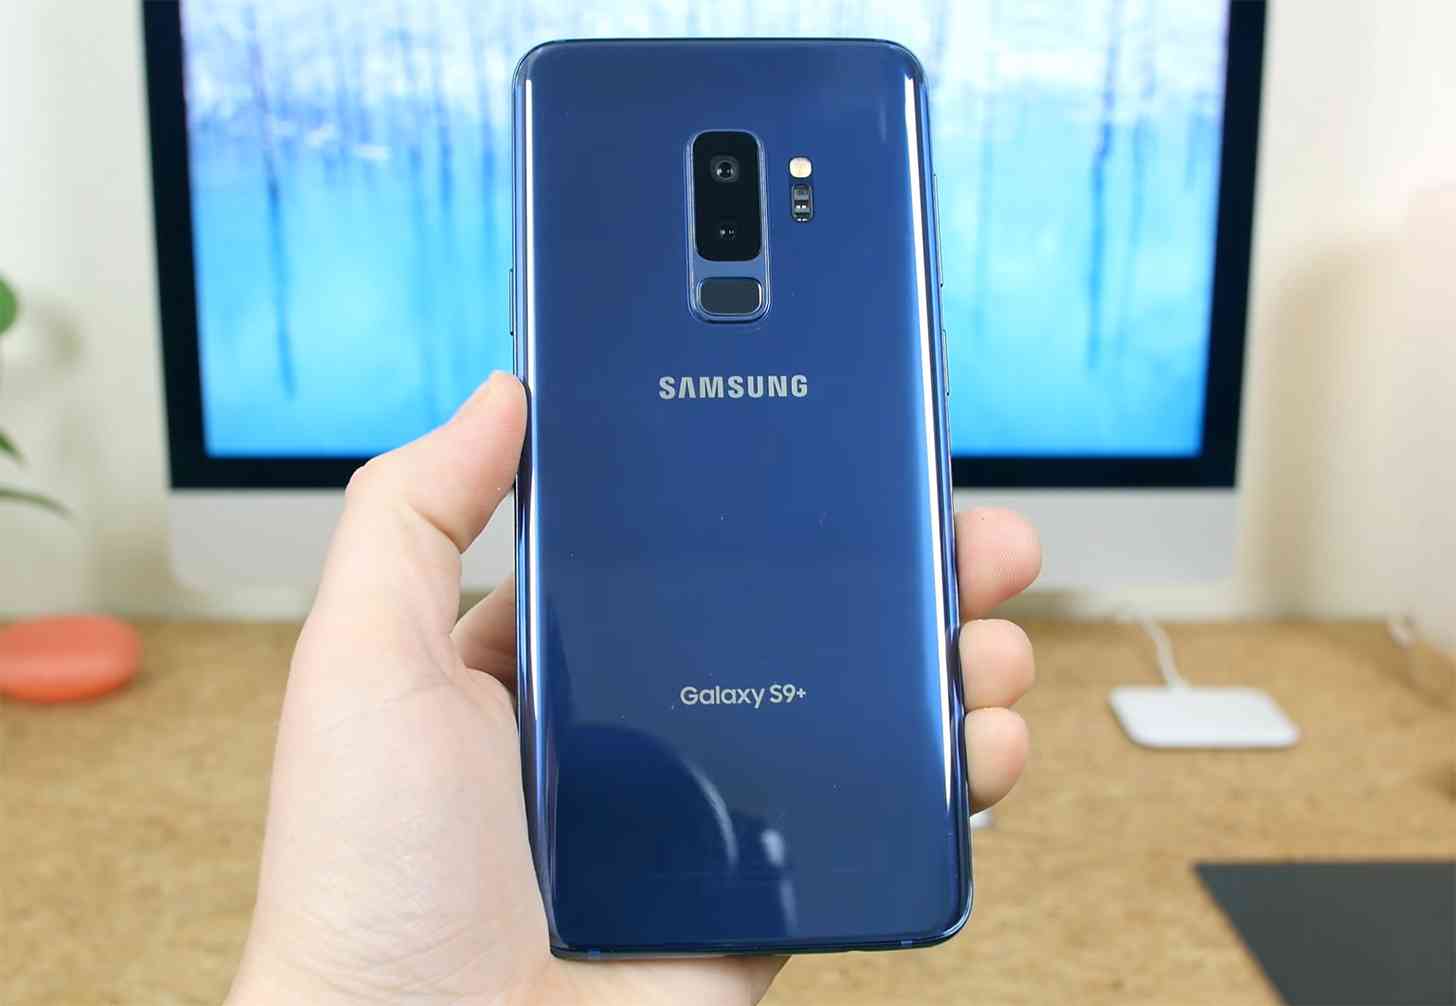 Samsung Galaxy S9+ hands-on